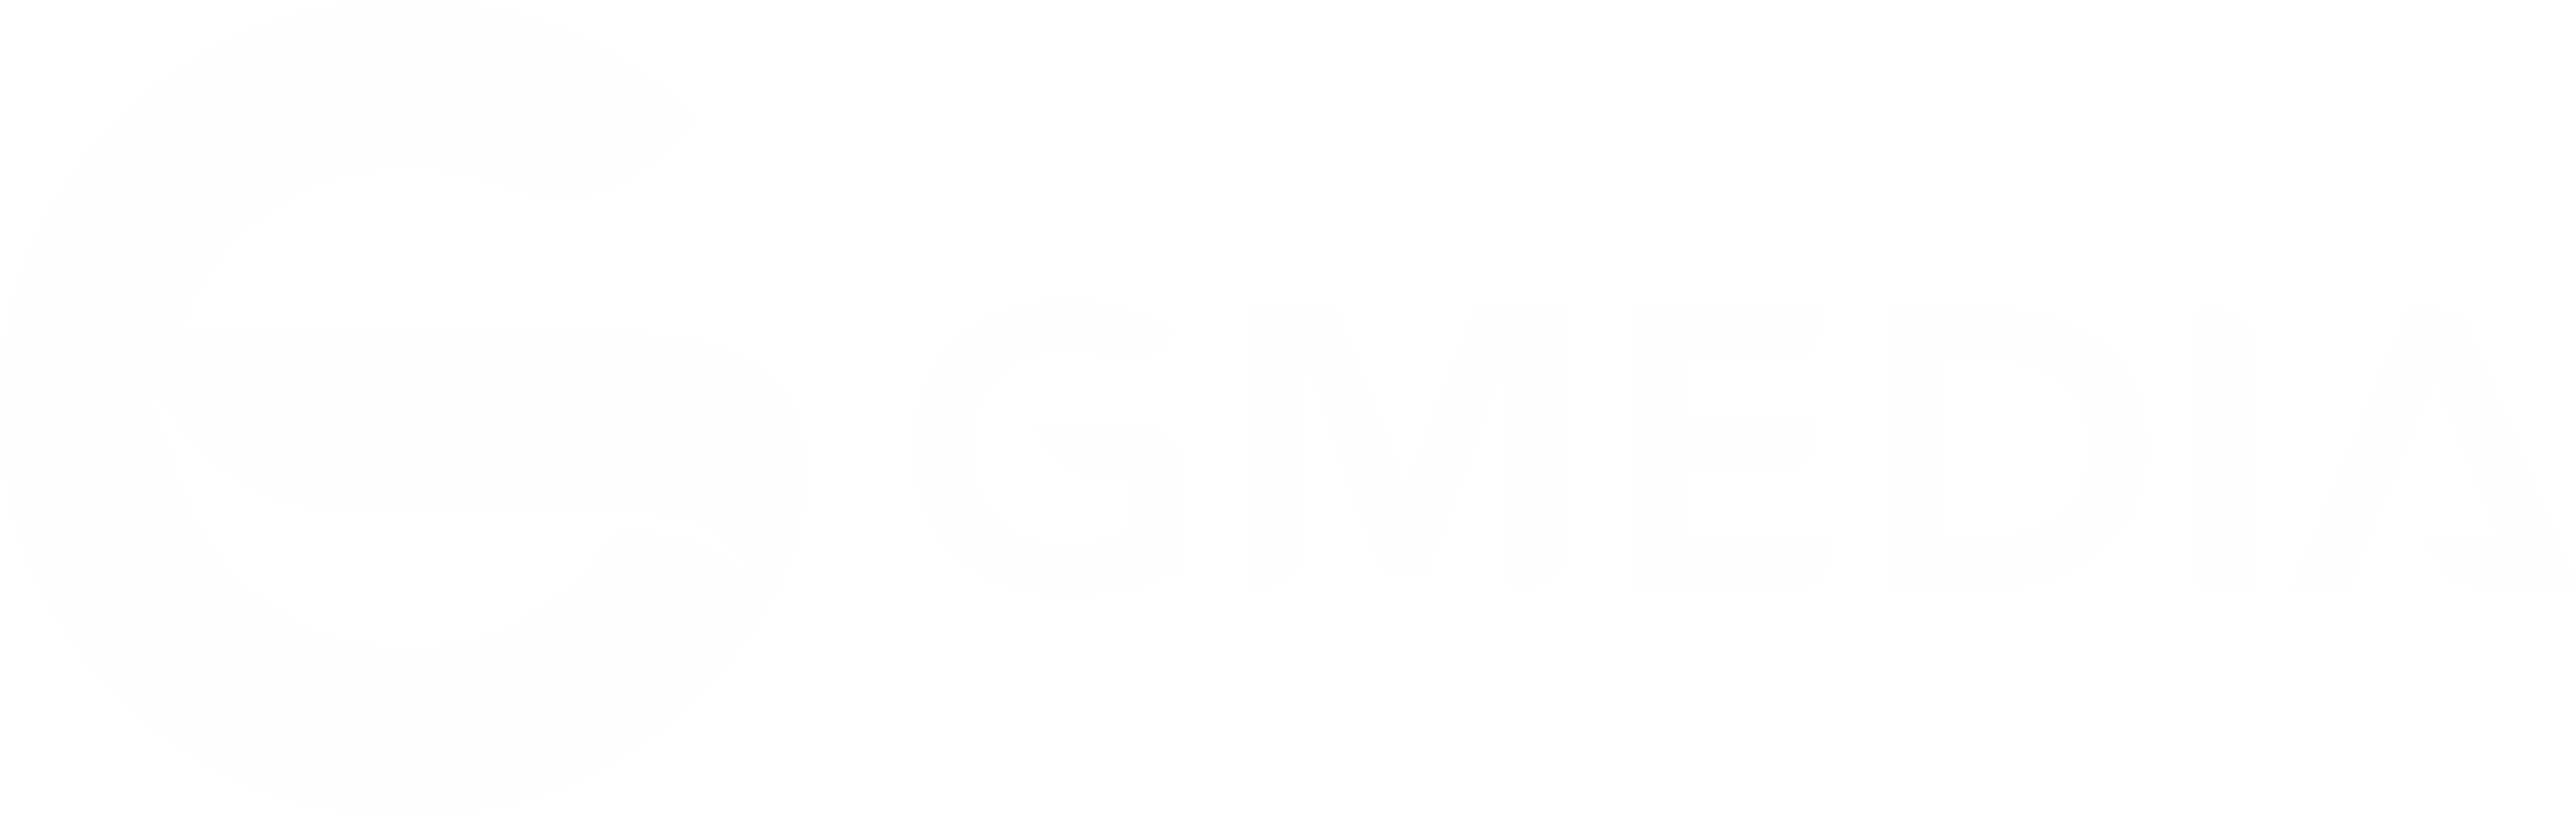 GMEDIA News